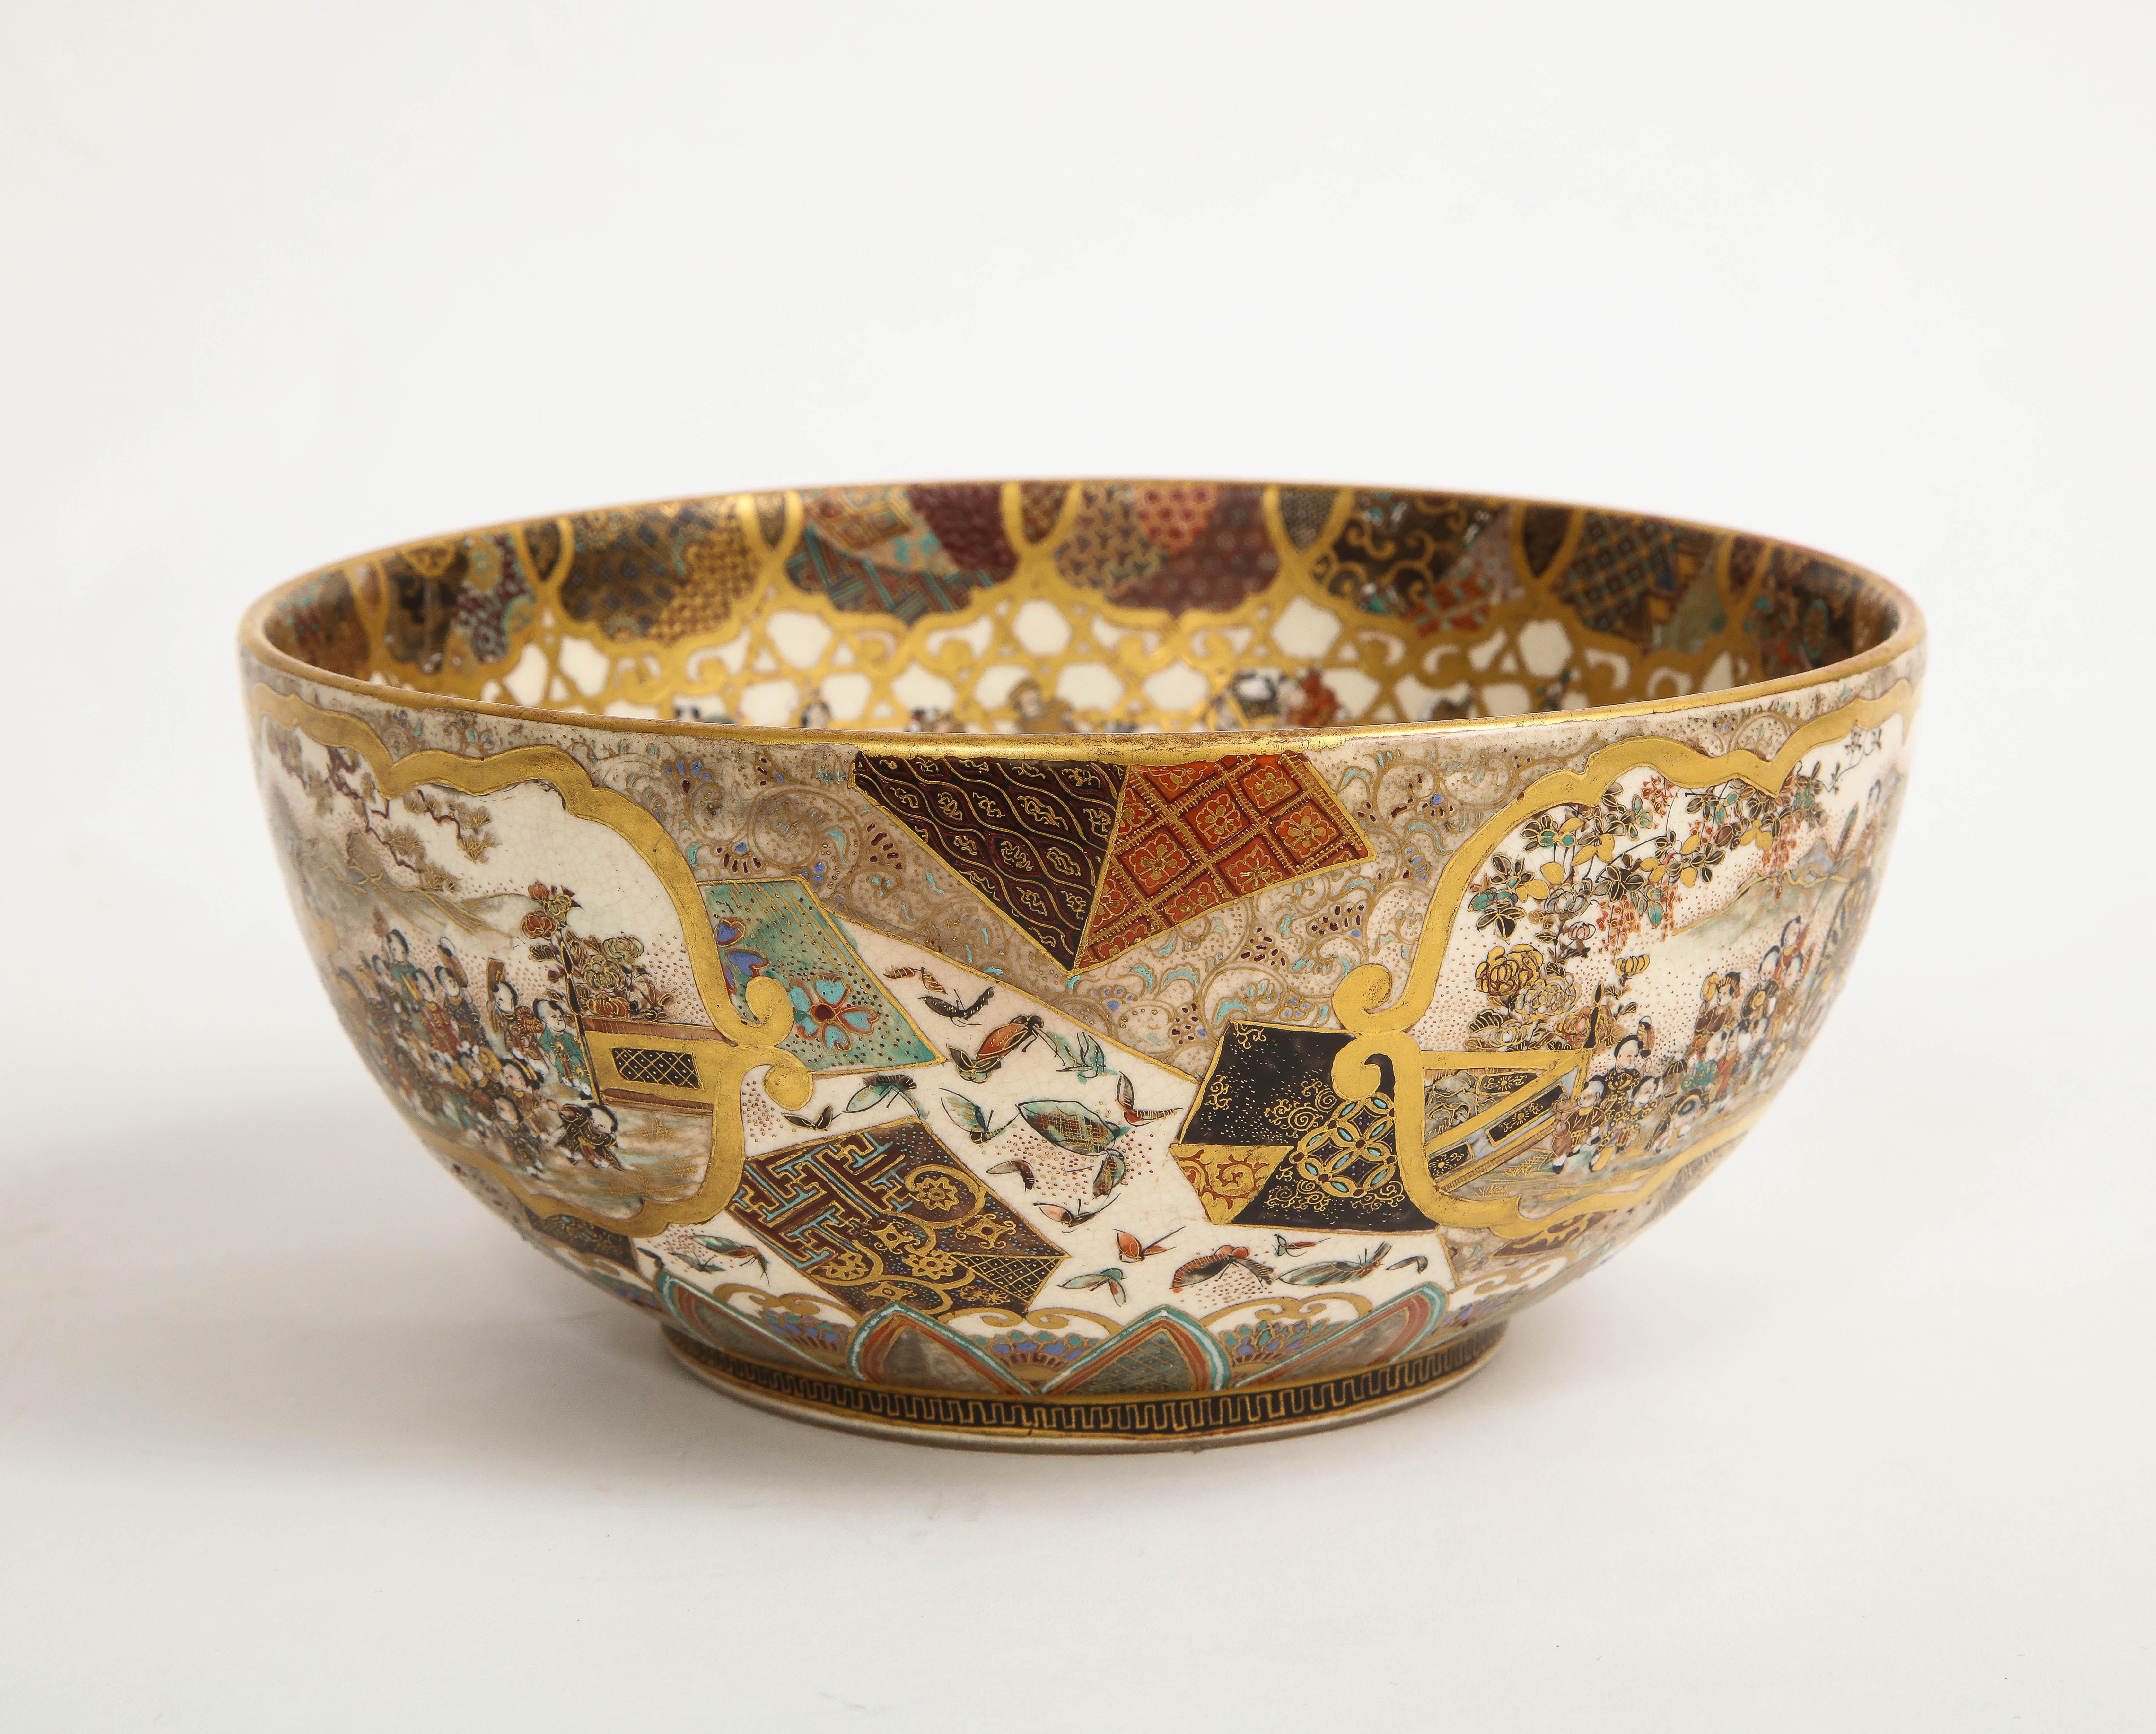 Late 19th Century 19th C. Japanese Satsuma Bowl, Meiji Era, Probably by Meizan, Signed on Bottom